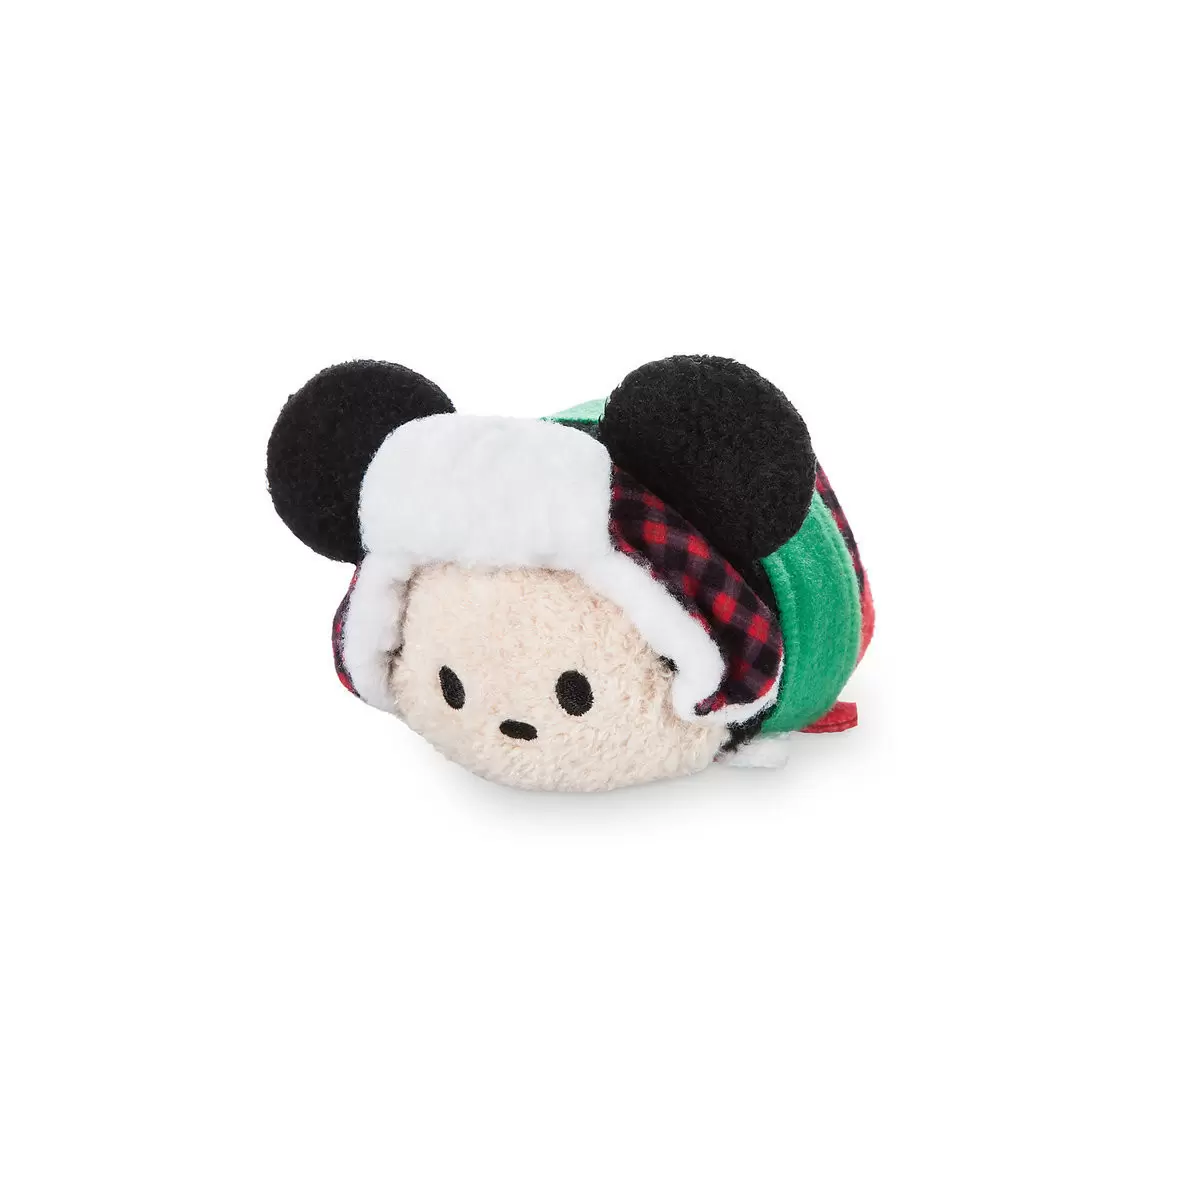 Mini Tsum Tsum - Mickey and Friends Holiday 2017